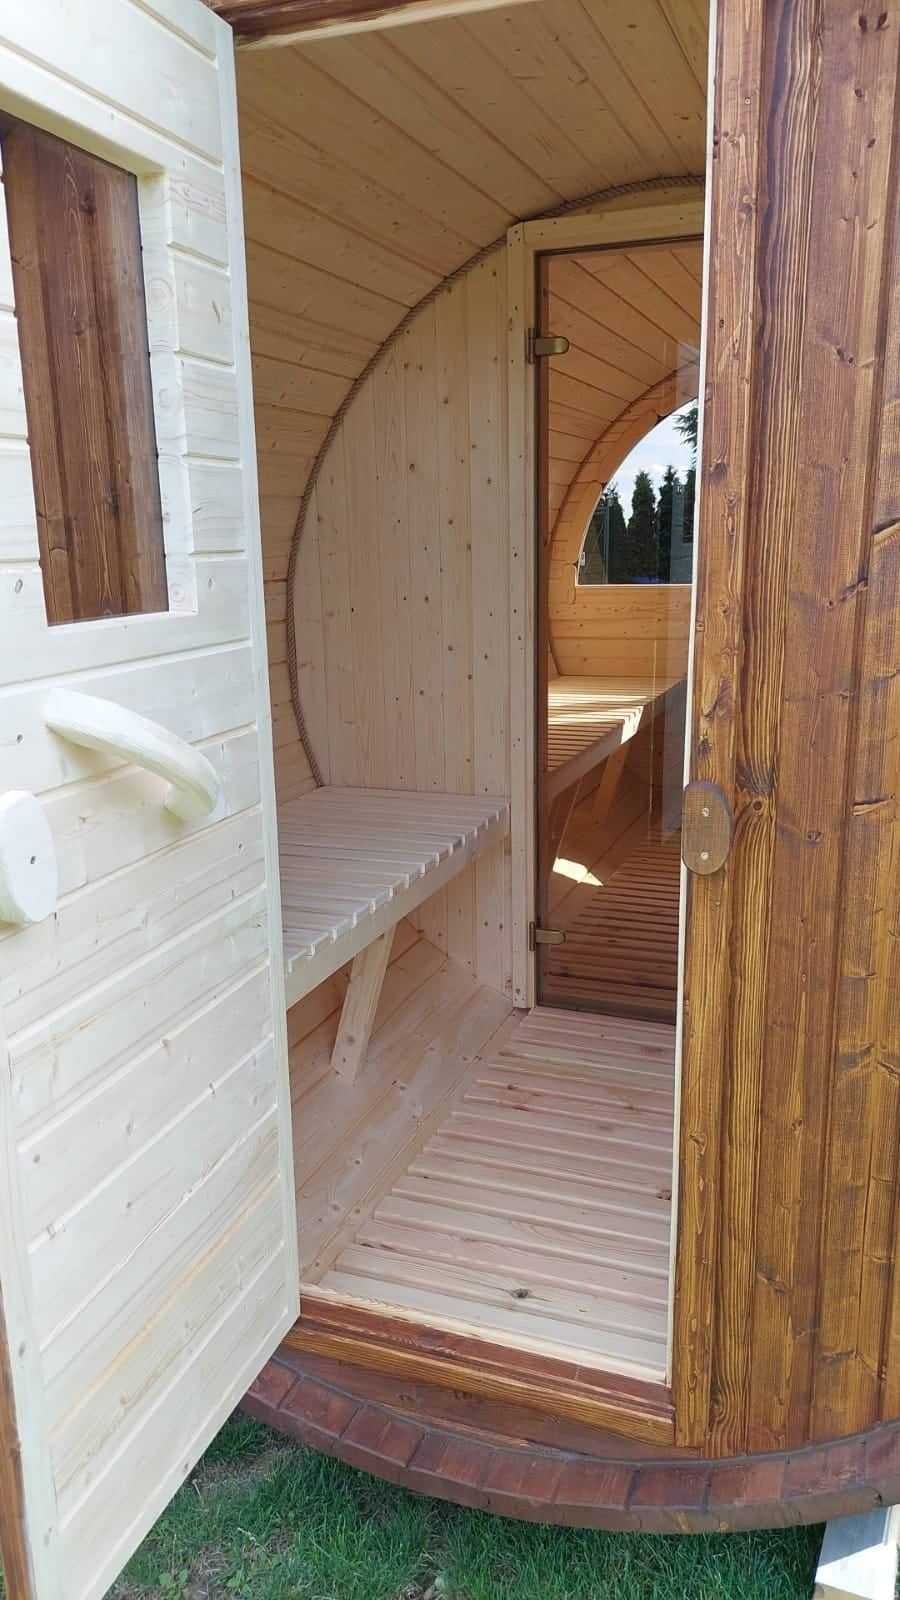 sauna ogrodowa, sauna beczka, beczka, sauna ogrzewana drewnem